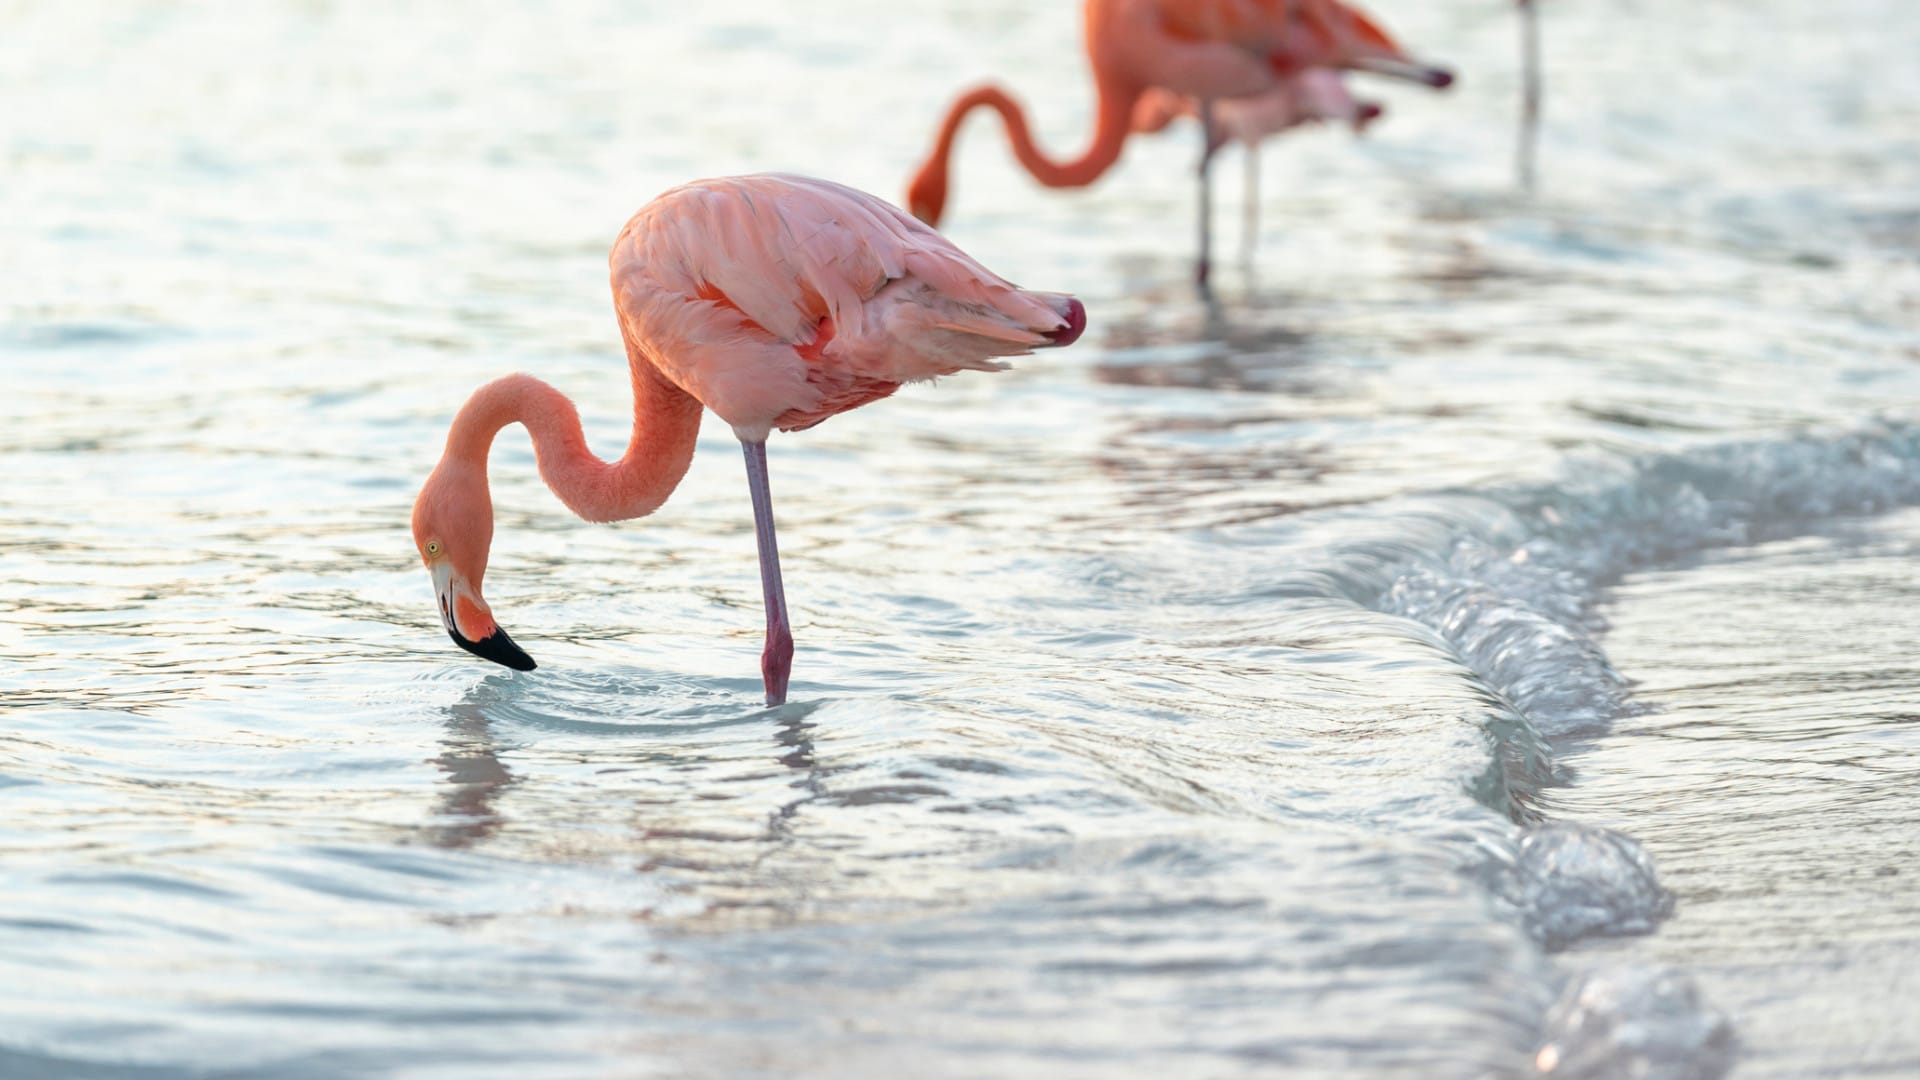 Image of Flamingos